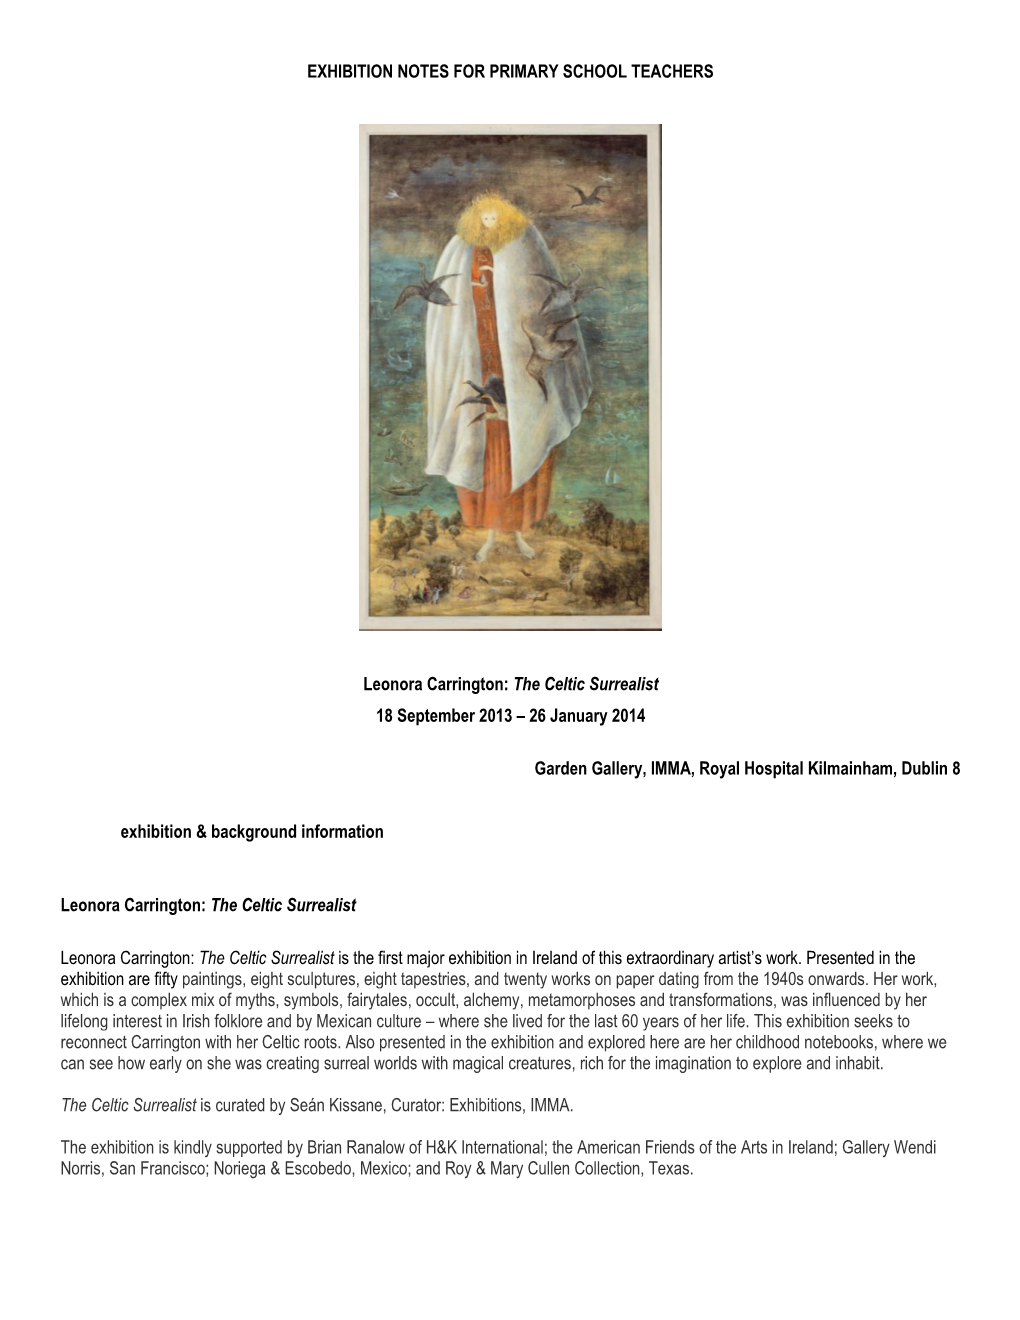 EXHIBITION NOTES for PRIMARY SCHOOL TEACHERS Leonora Carrington: the Celtic Surrealist 18 September 2013 – 26 January 2014